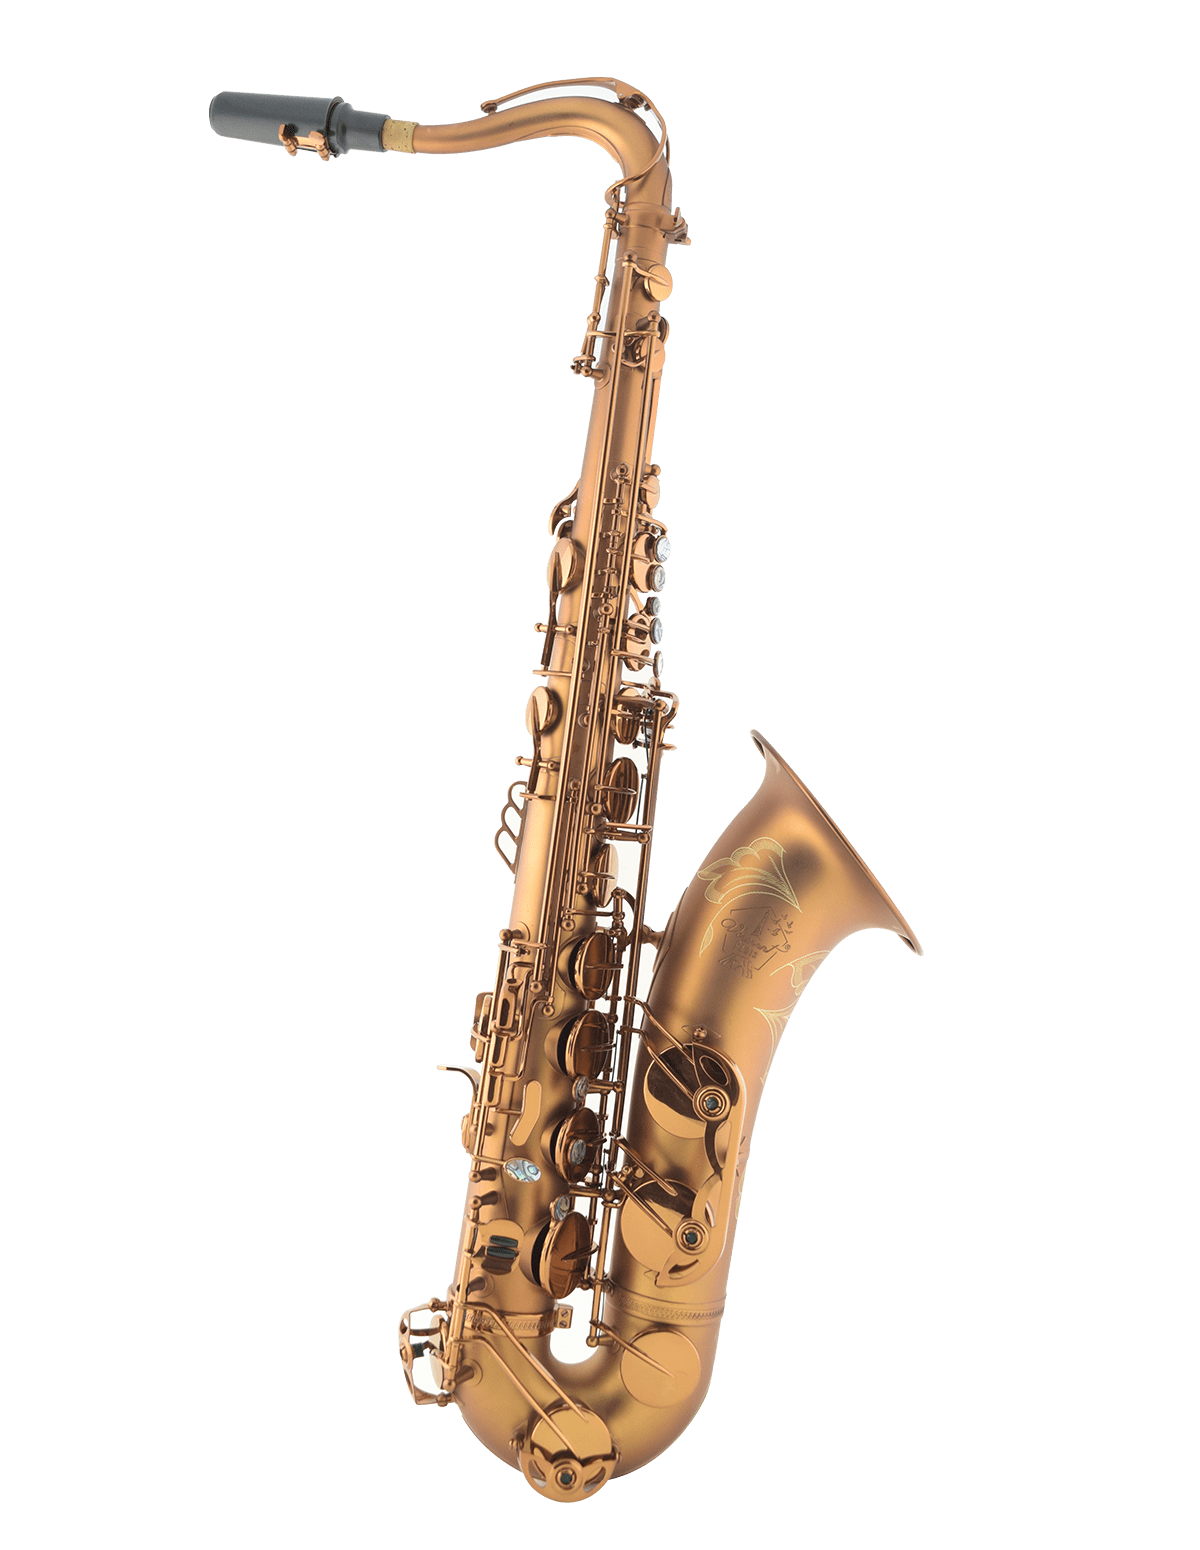 Saxofone Tenor Vermont Paris